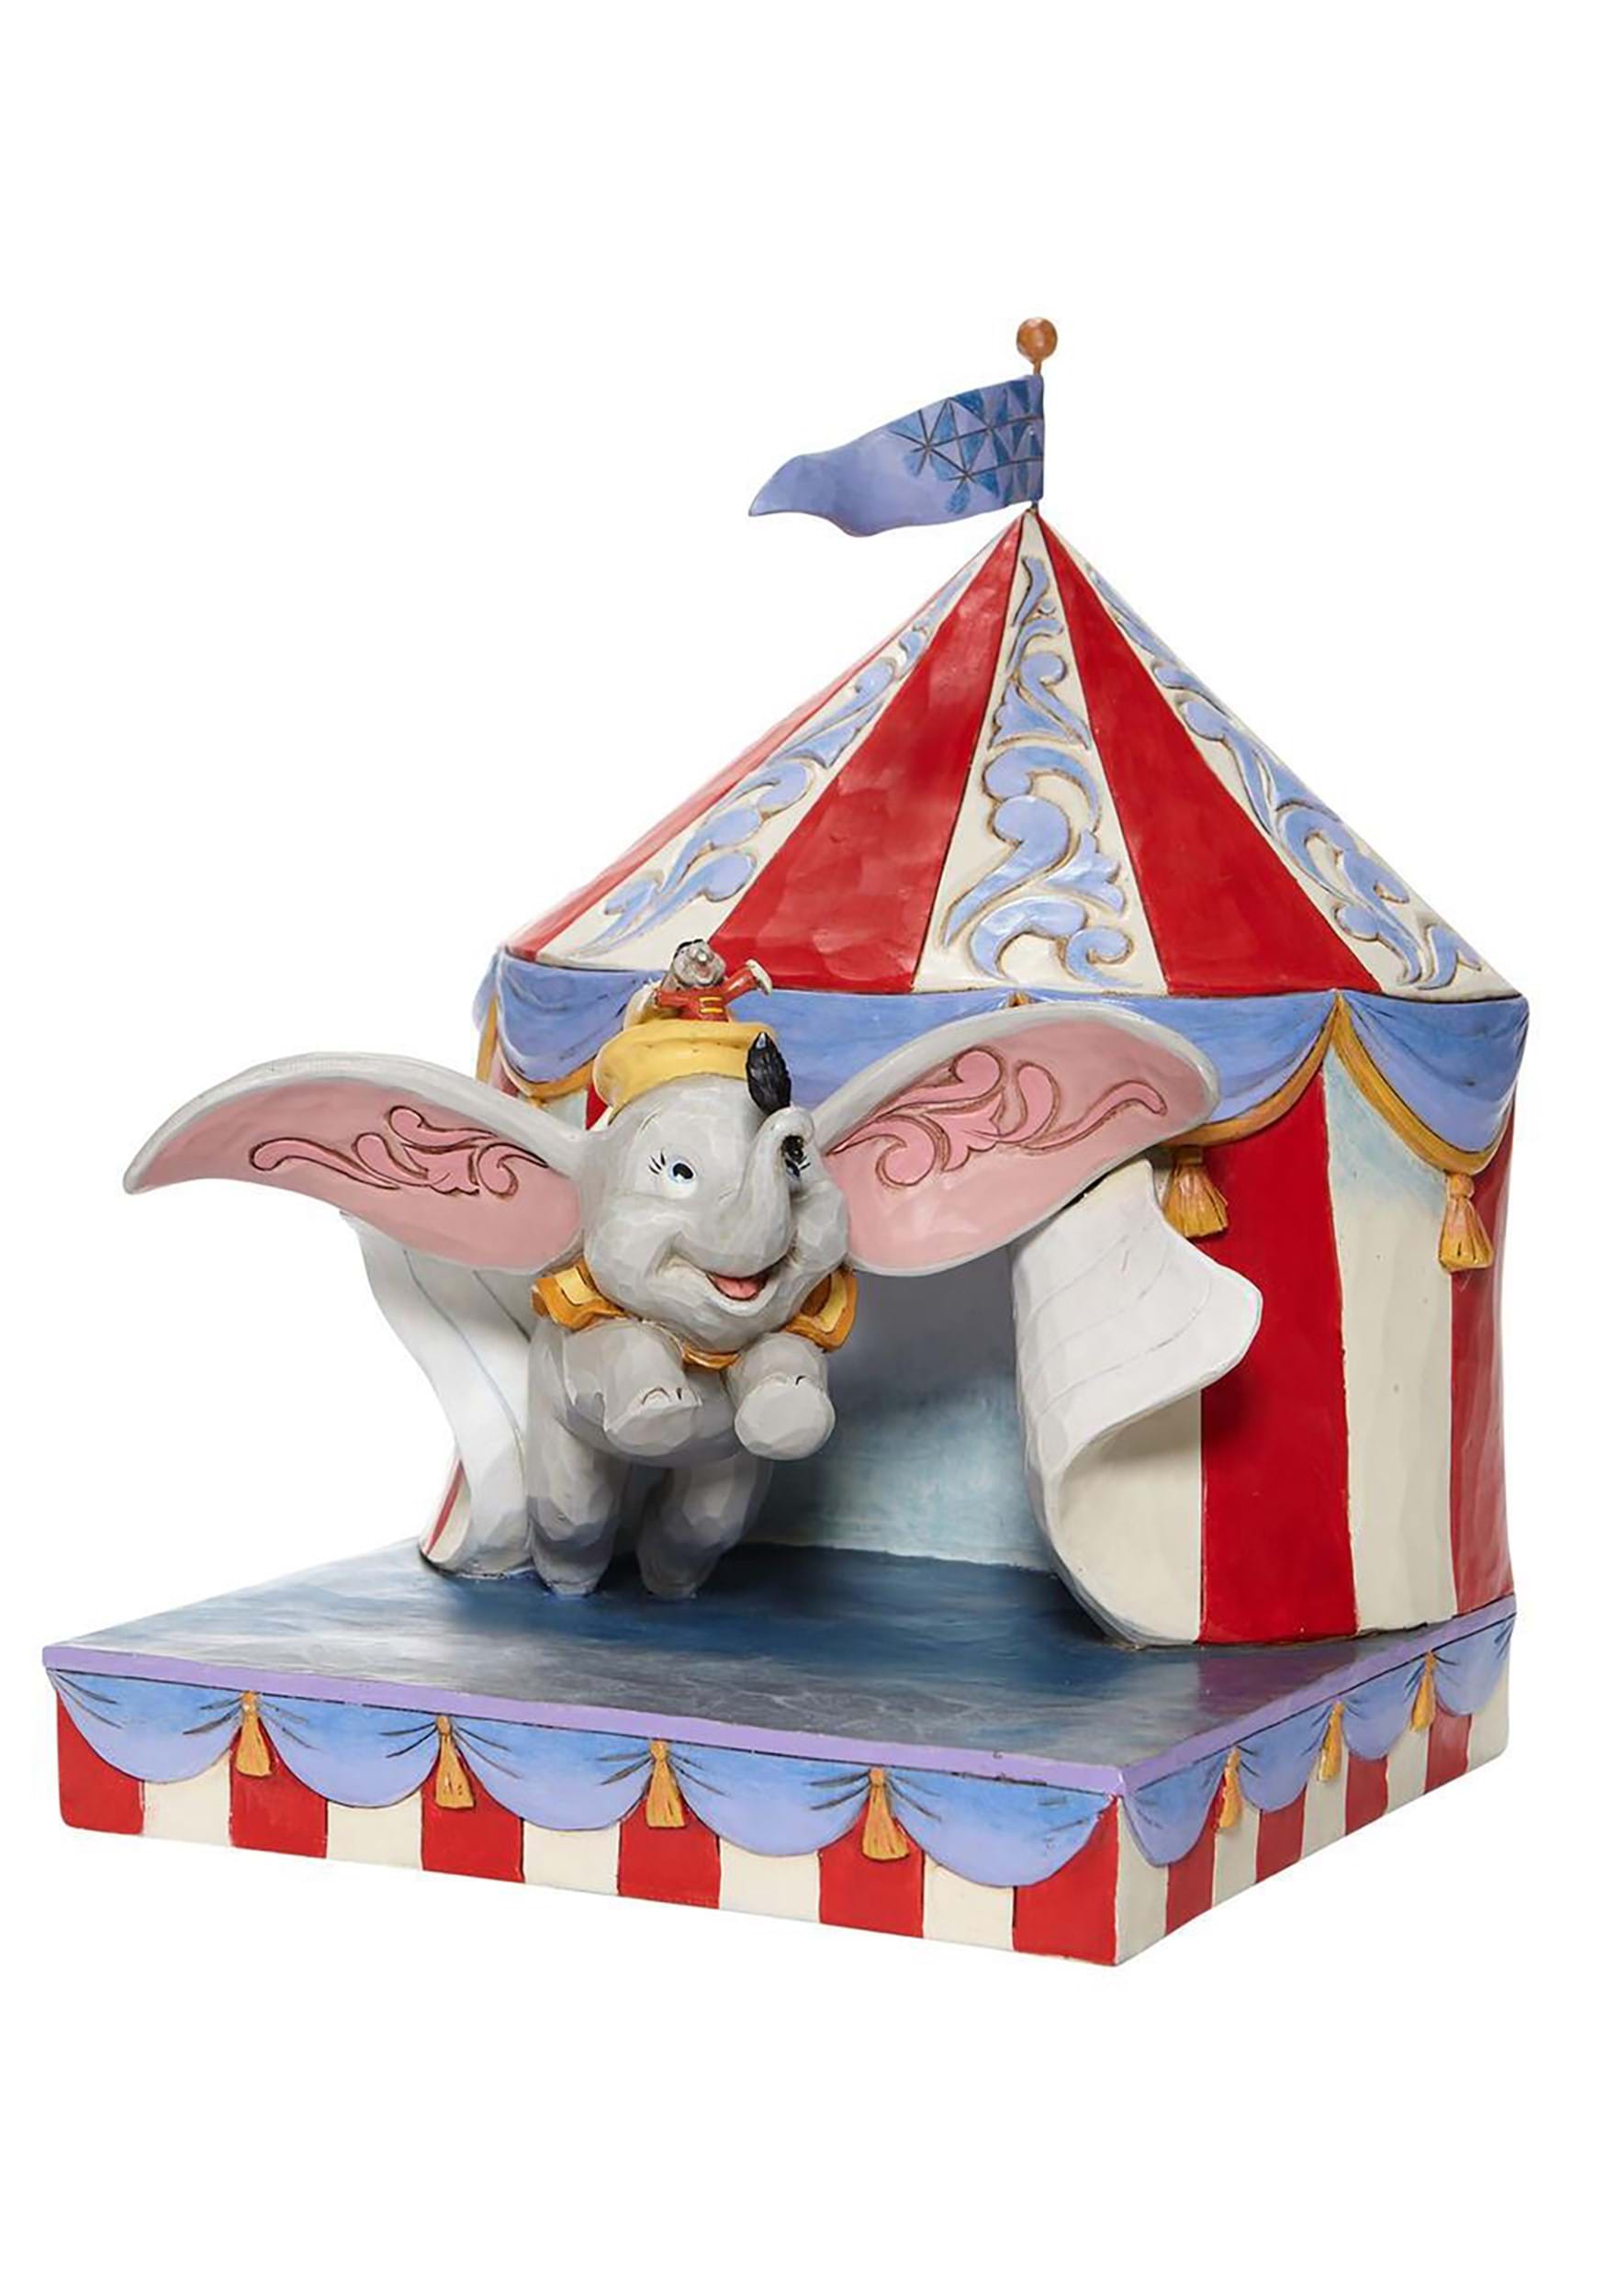 Jim Shore Dumbo Flying Out Of Tent Scene Disney Diorama